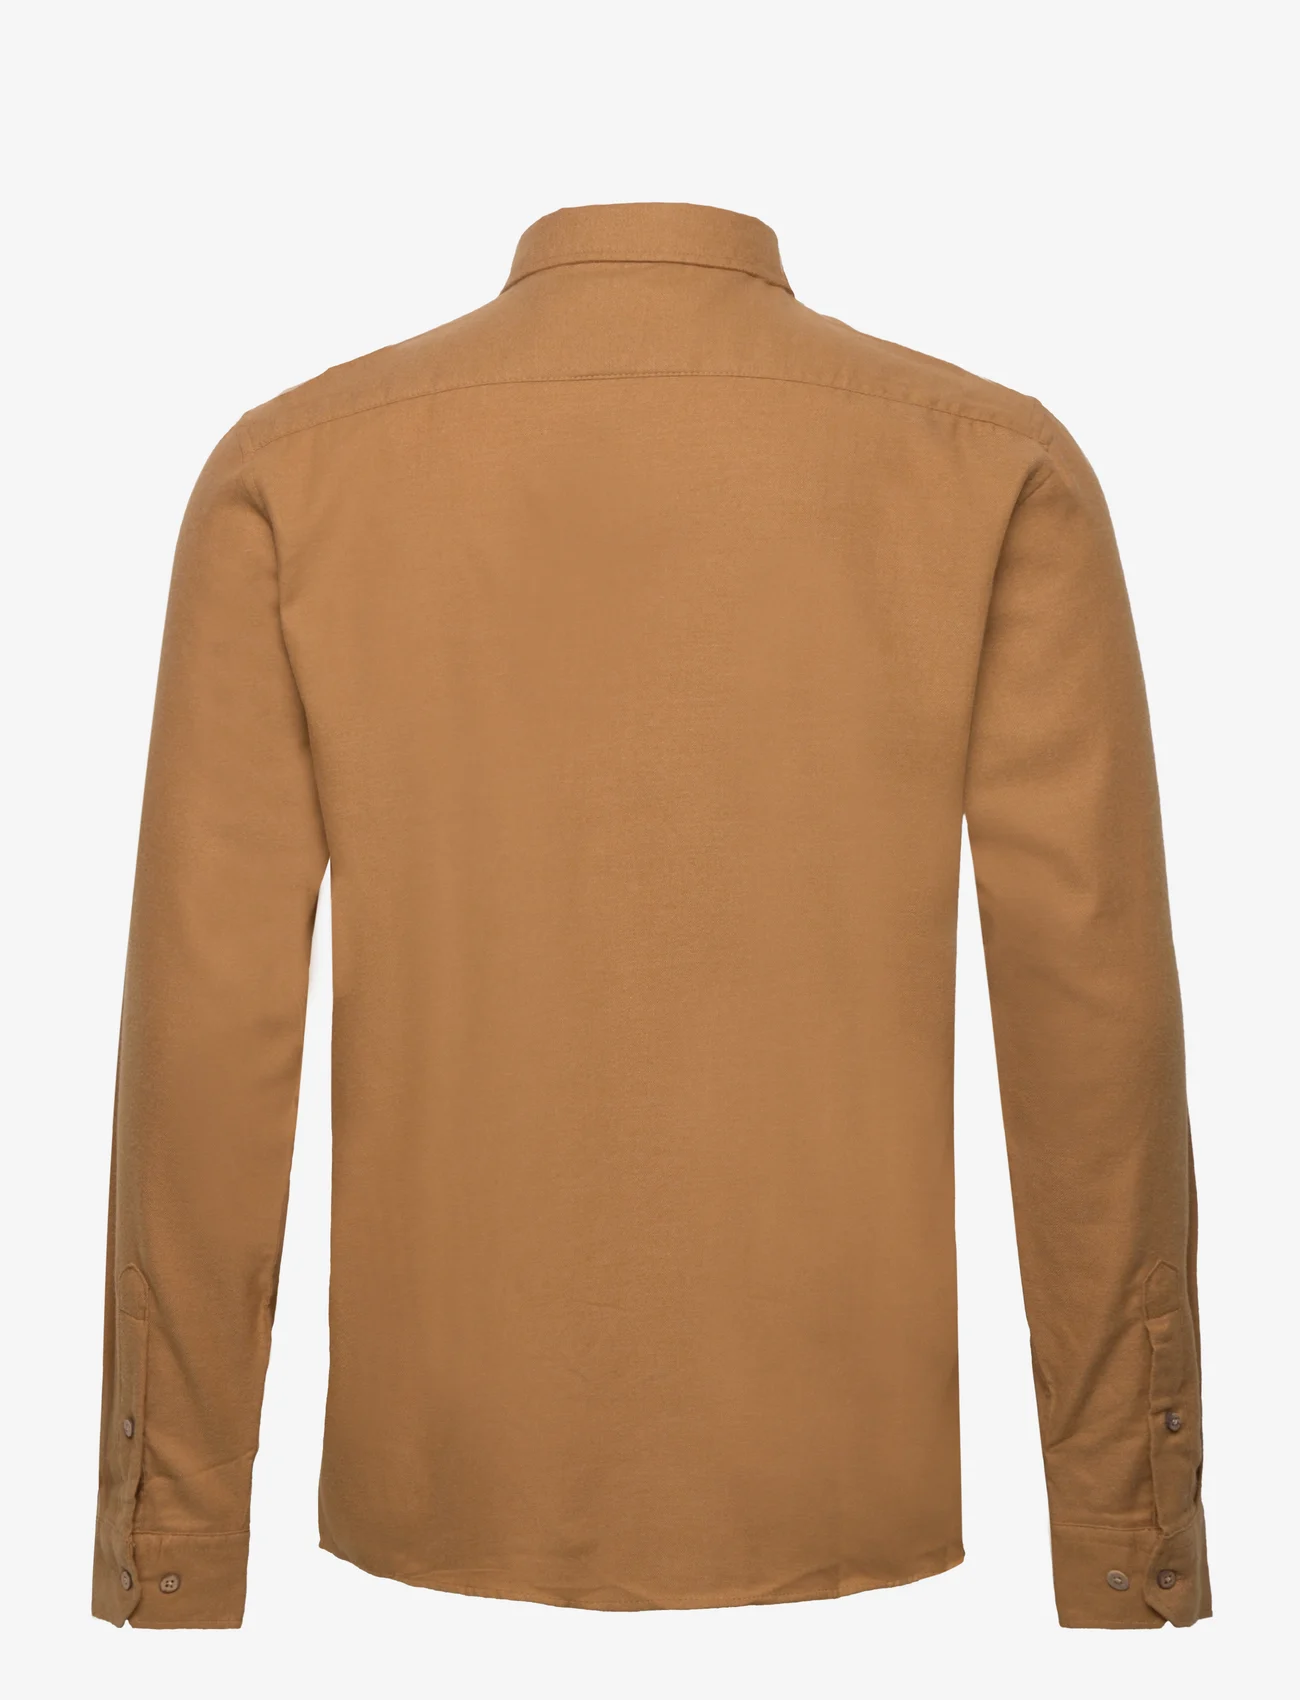 Solid - SDPETE SH - basic shirts - cinnamon melange - 1